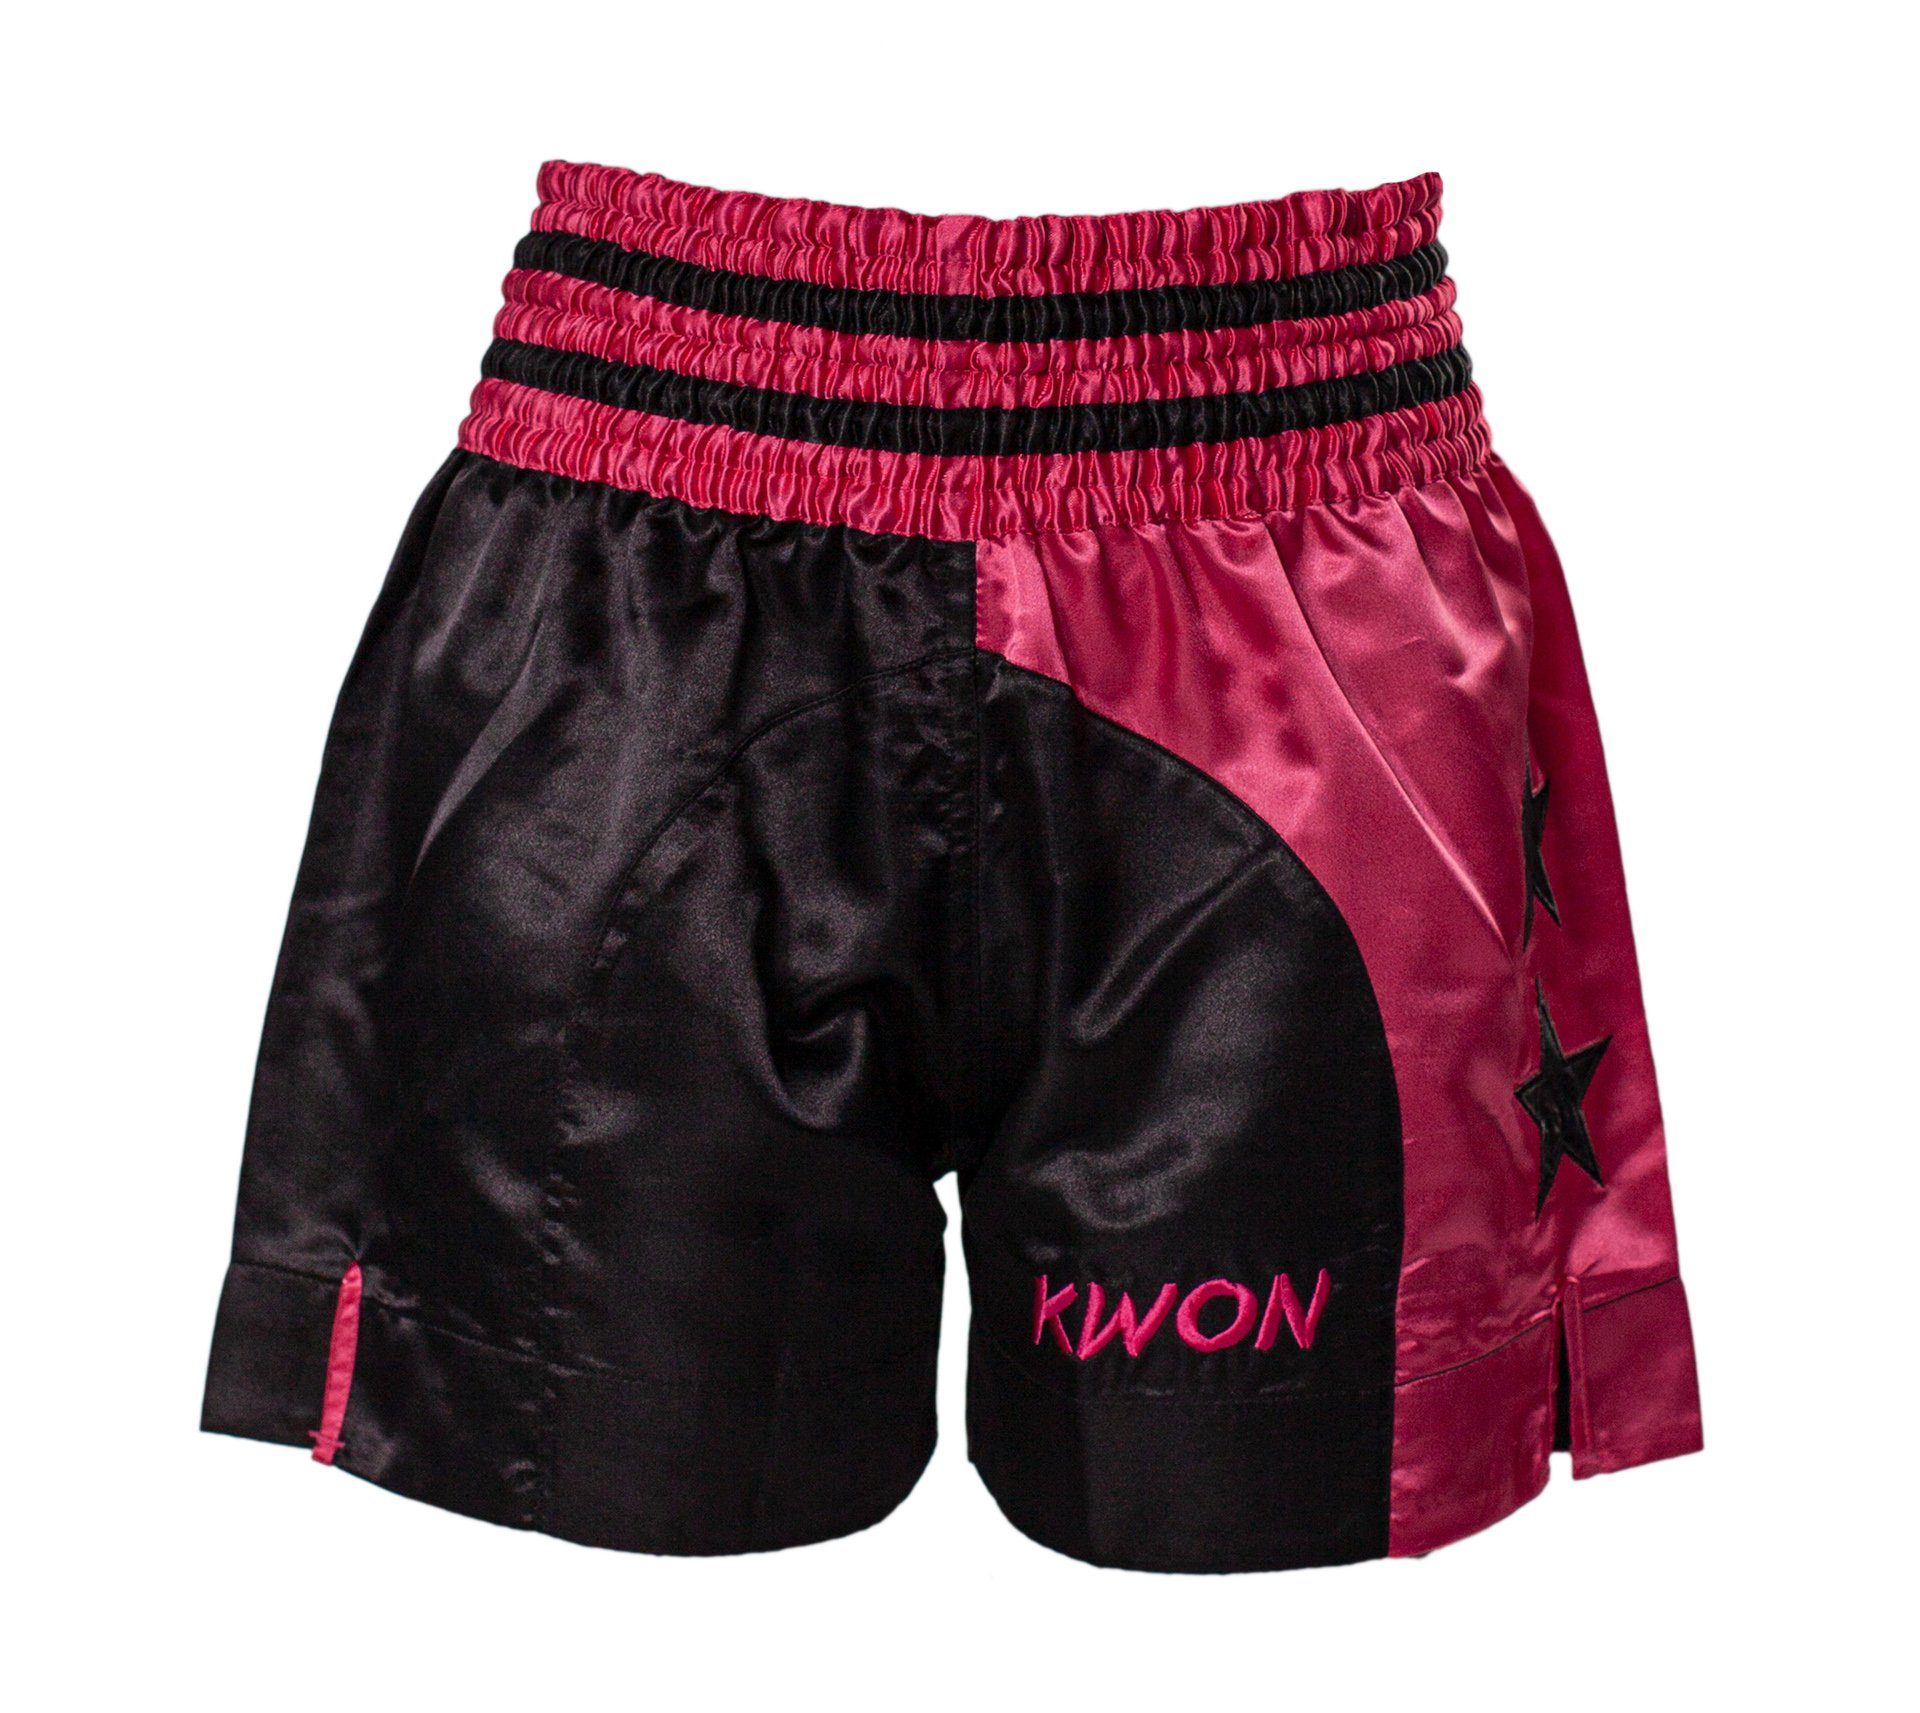 KWON Sporthose Thaiboxhose Damen Girl Muay Thai Шорти Kickboxen kurz magenta pink (Stück) Edler Look, traditioneller Schnitt, Sterne, kräftige Кольора(ів)